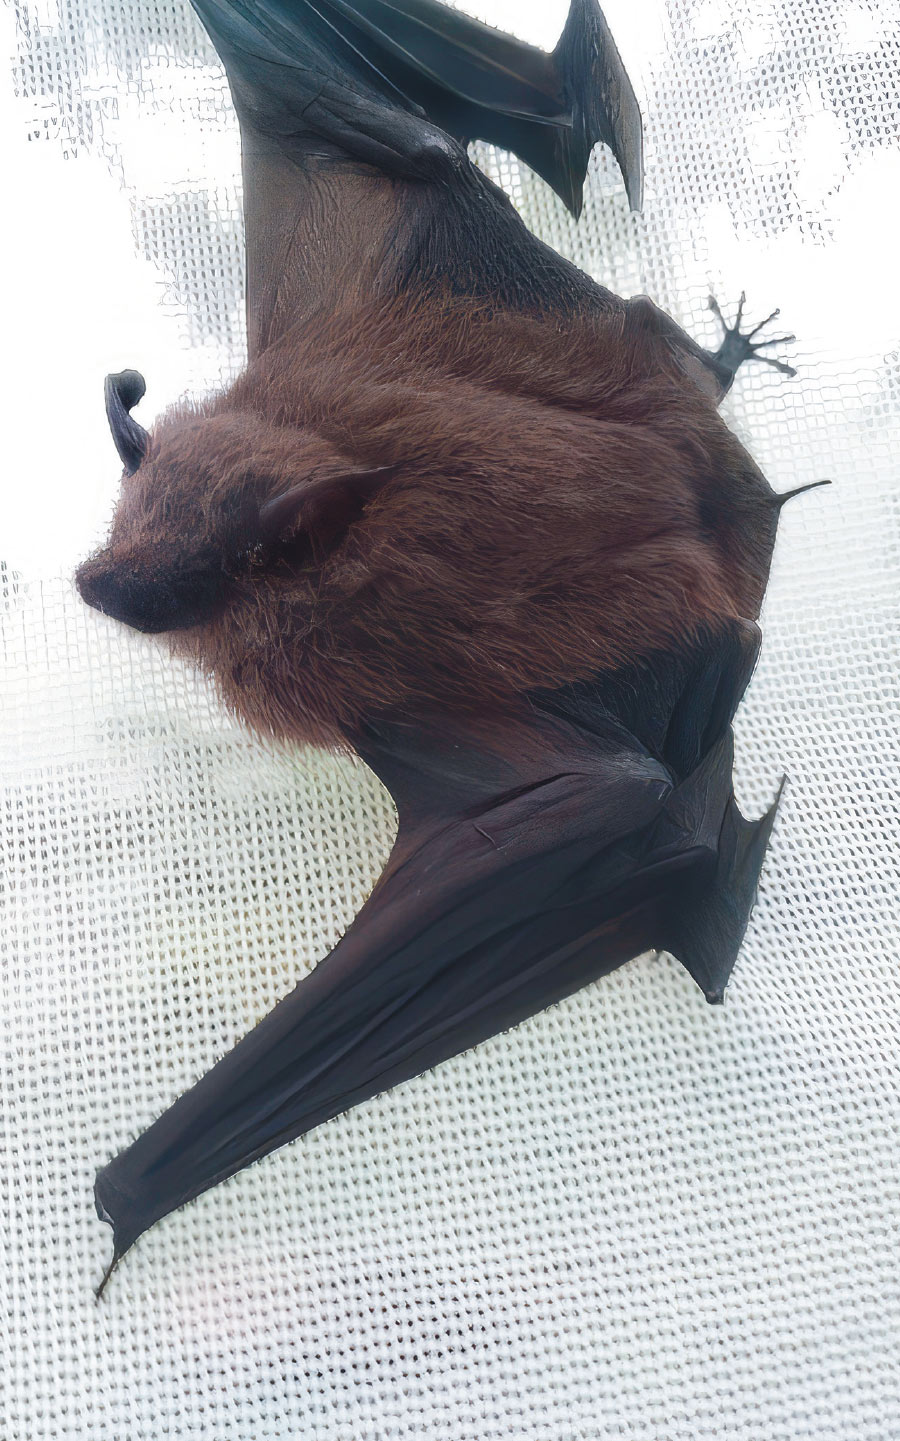 Antioquian sac-winged bat